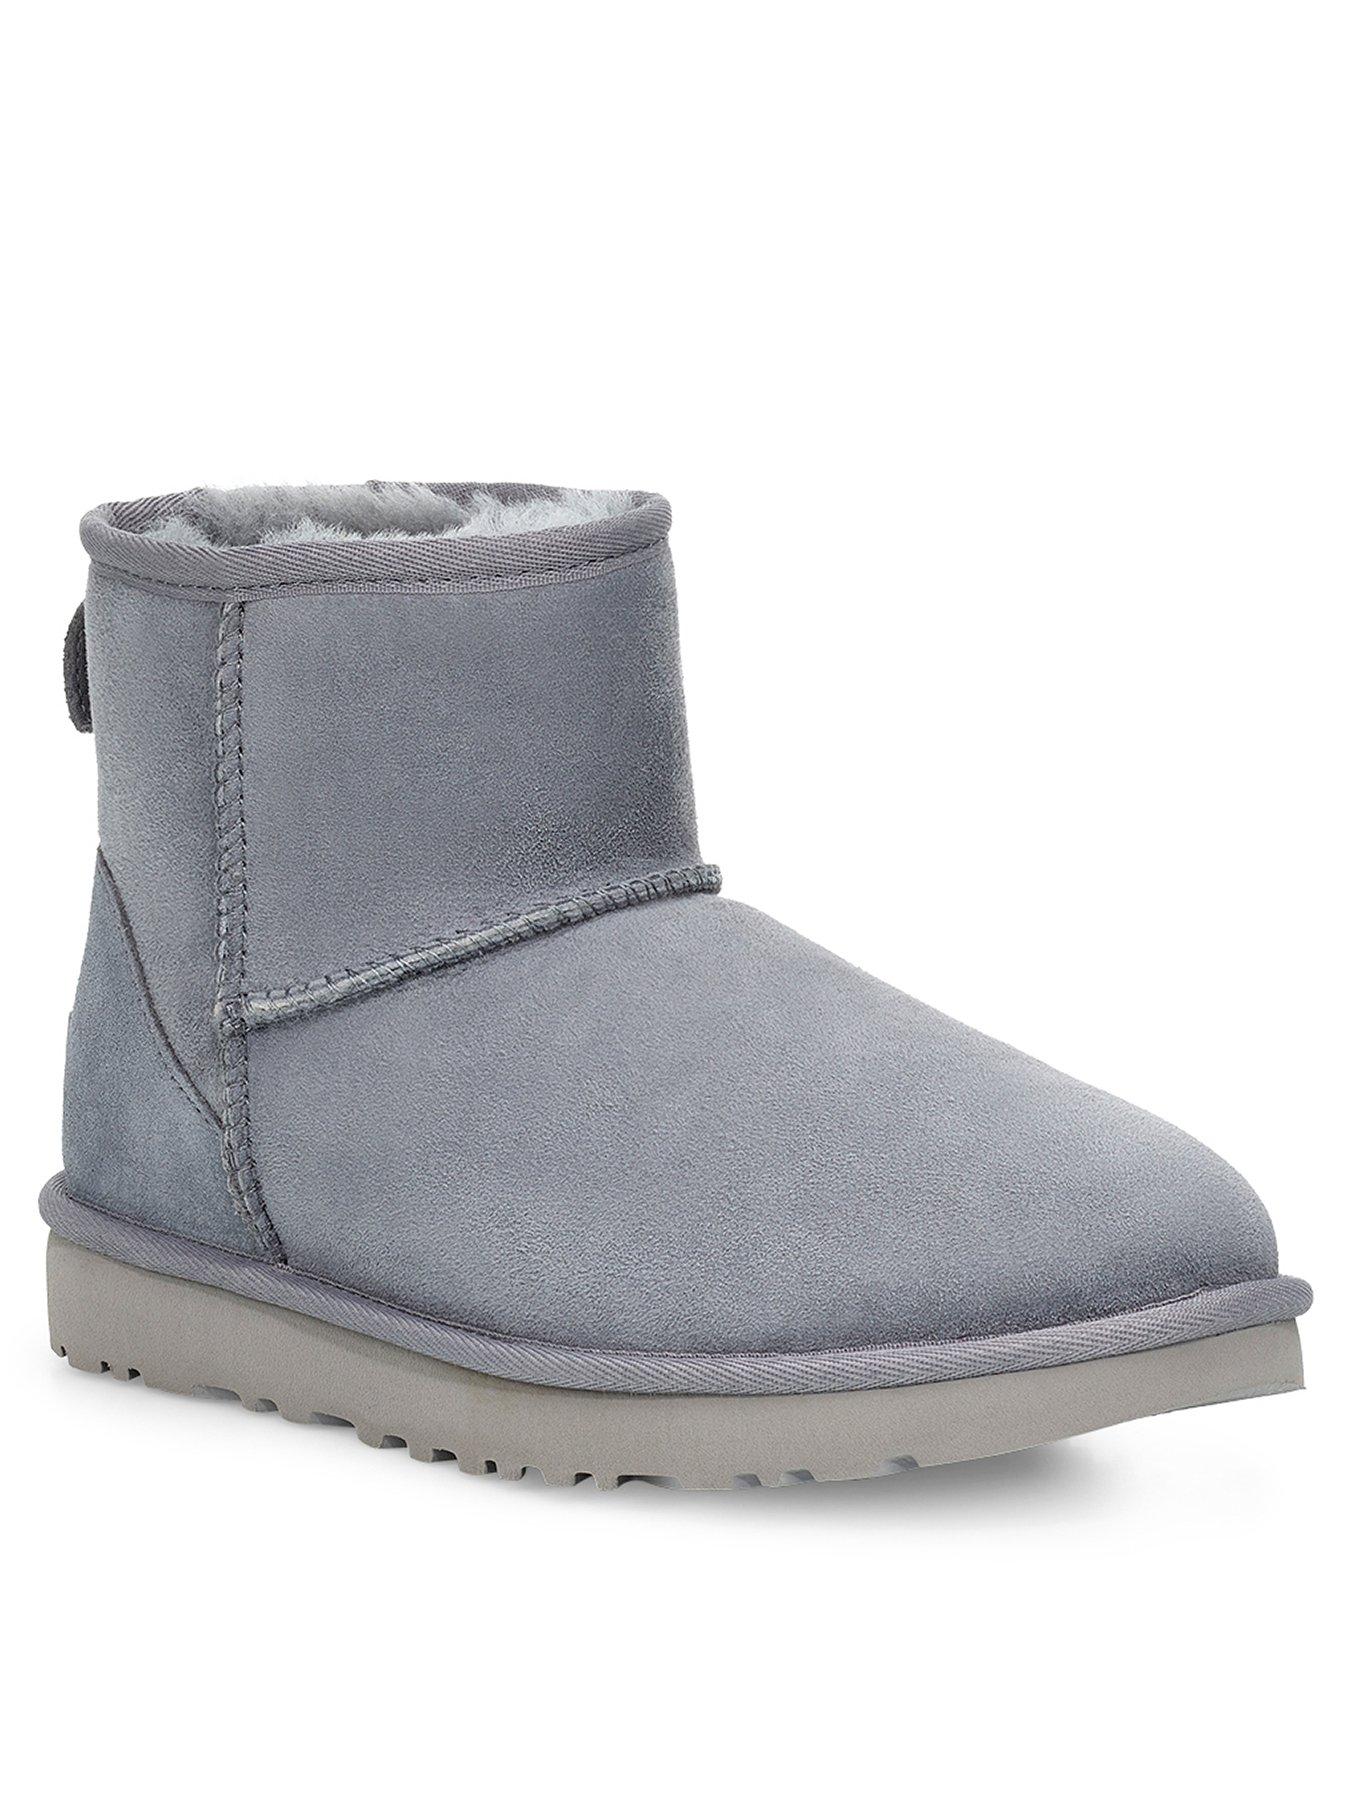 mini ugg boots grey